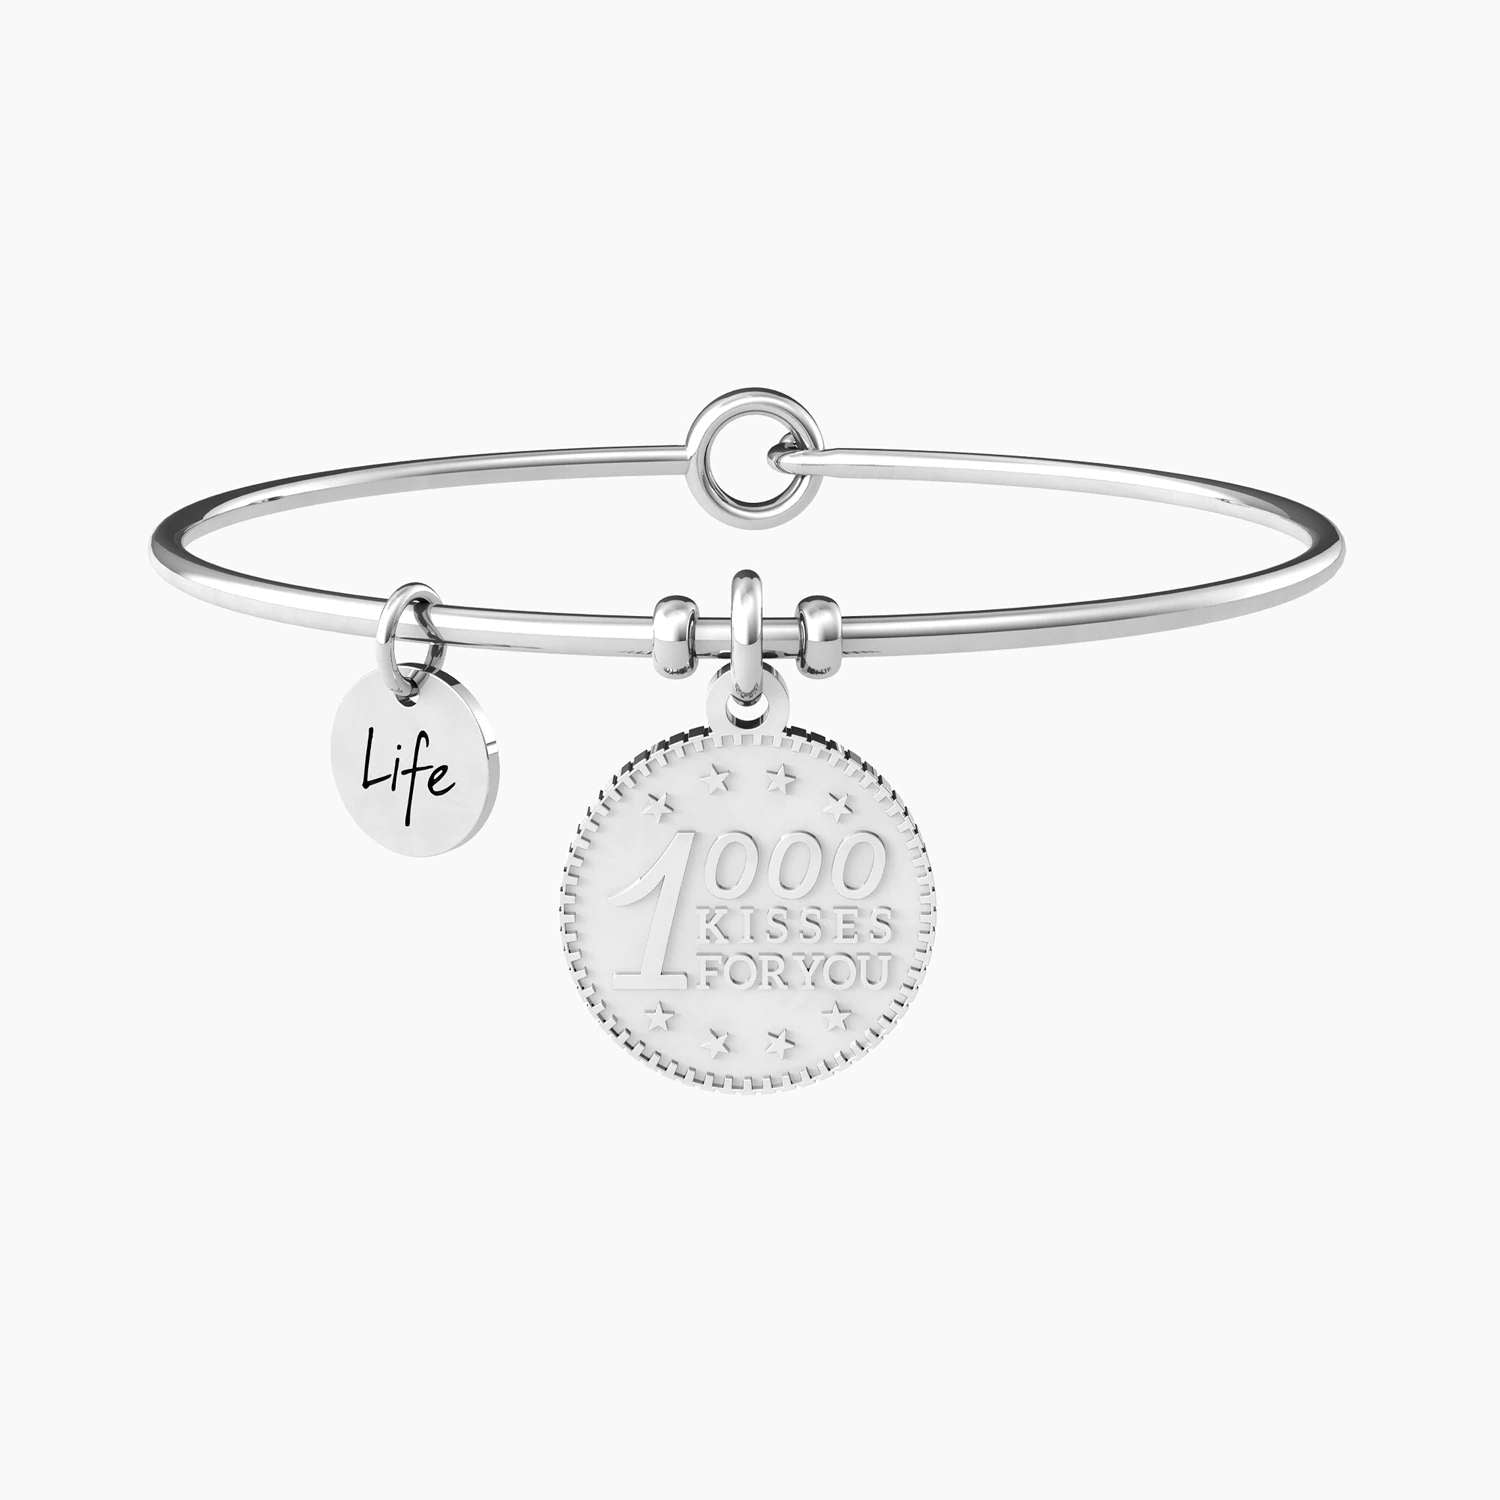 Women's bracelet Love collection - 1000 Kisses for you - 731991